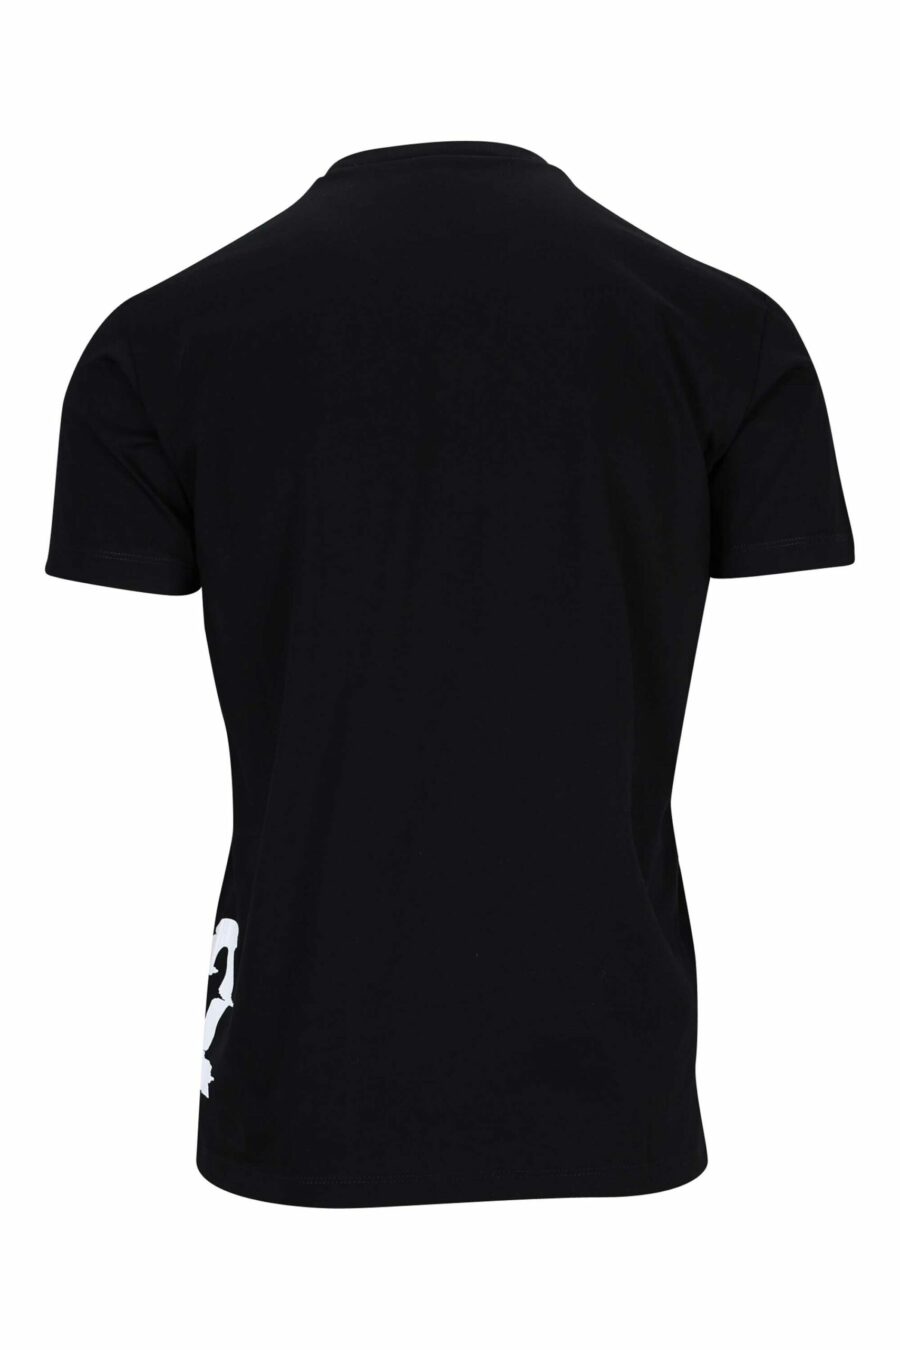 Camiseta negra con maxilogo negro distorsionado bajo - 8054148332808 1 scaled